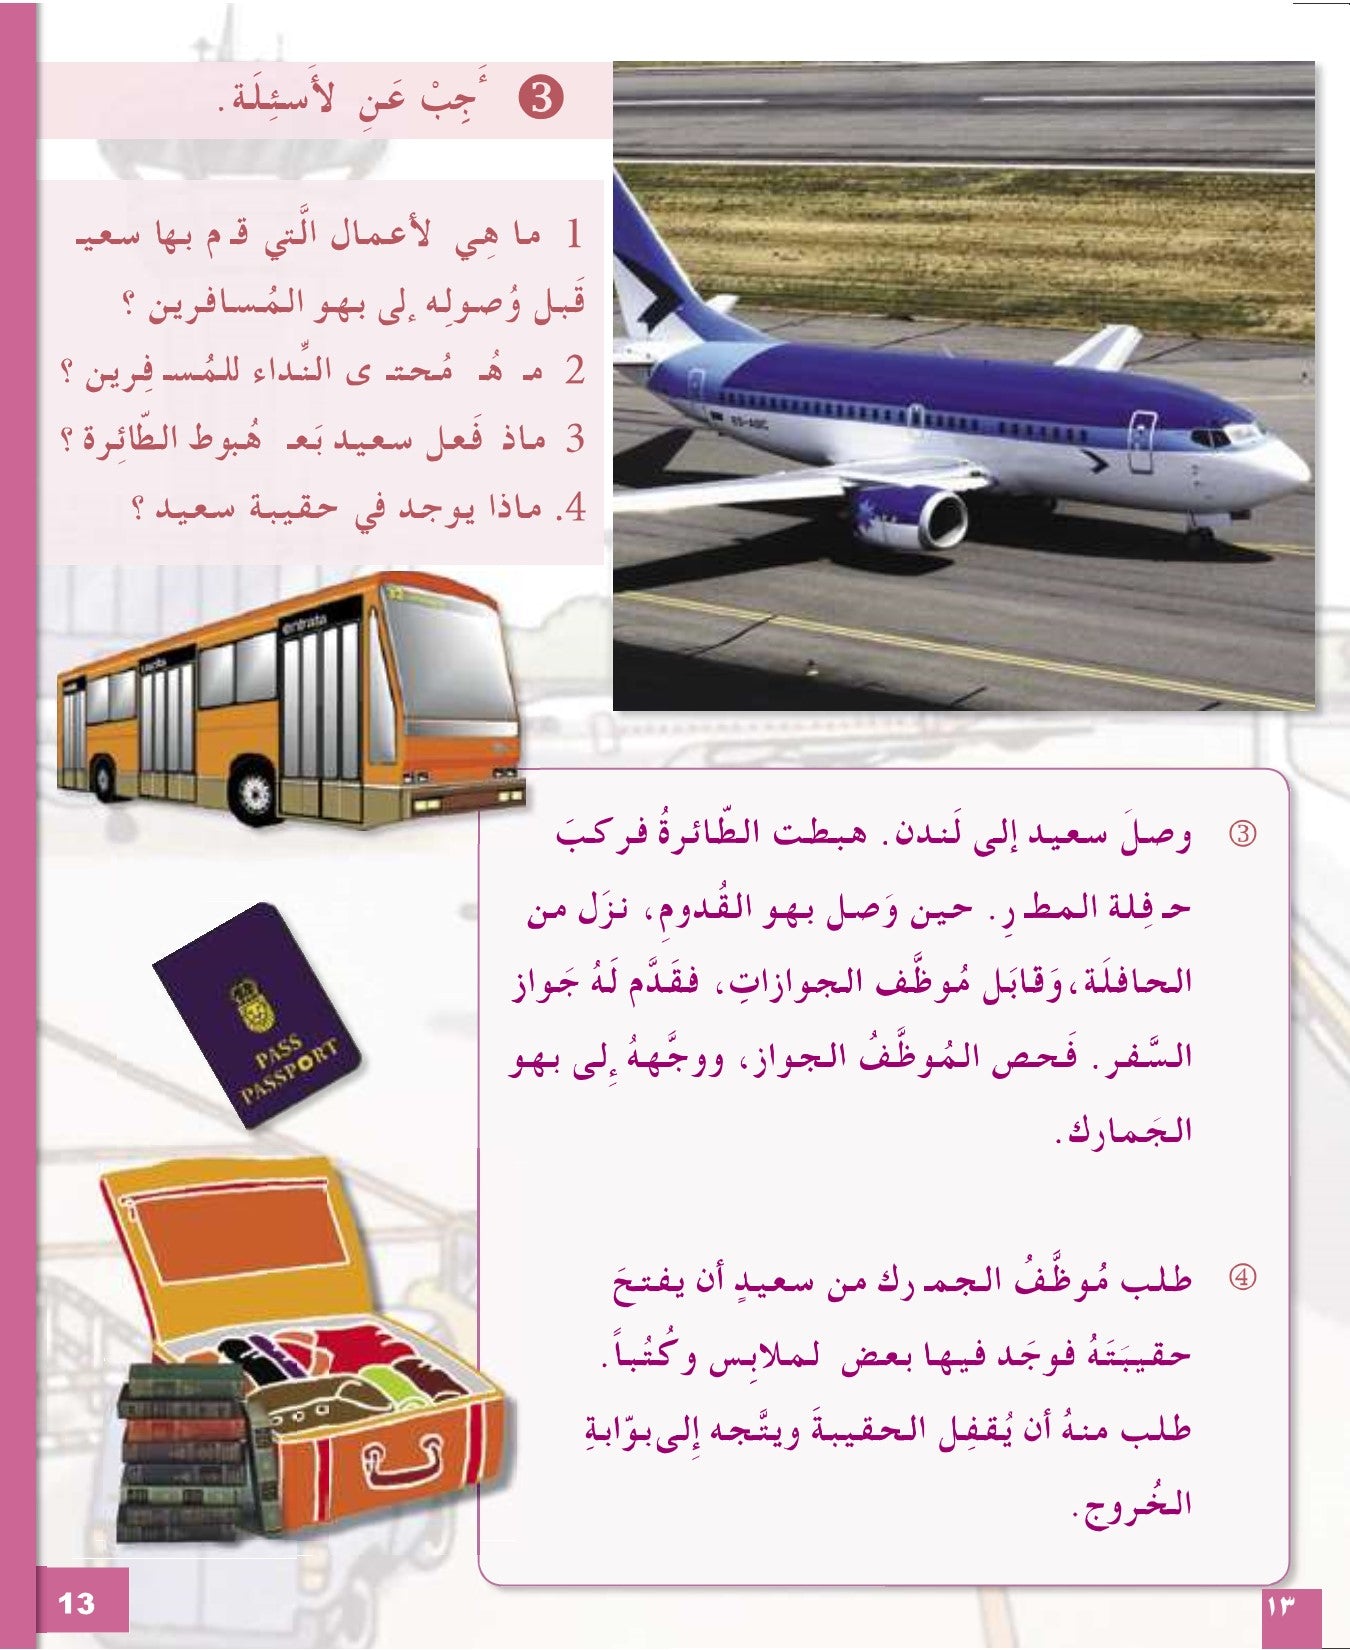 I Love and Learn Arabic (أحب و أتعلم العربية) - Level 5 - Textbook